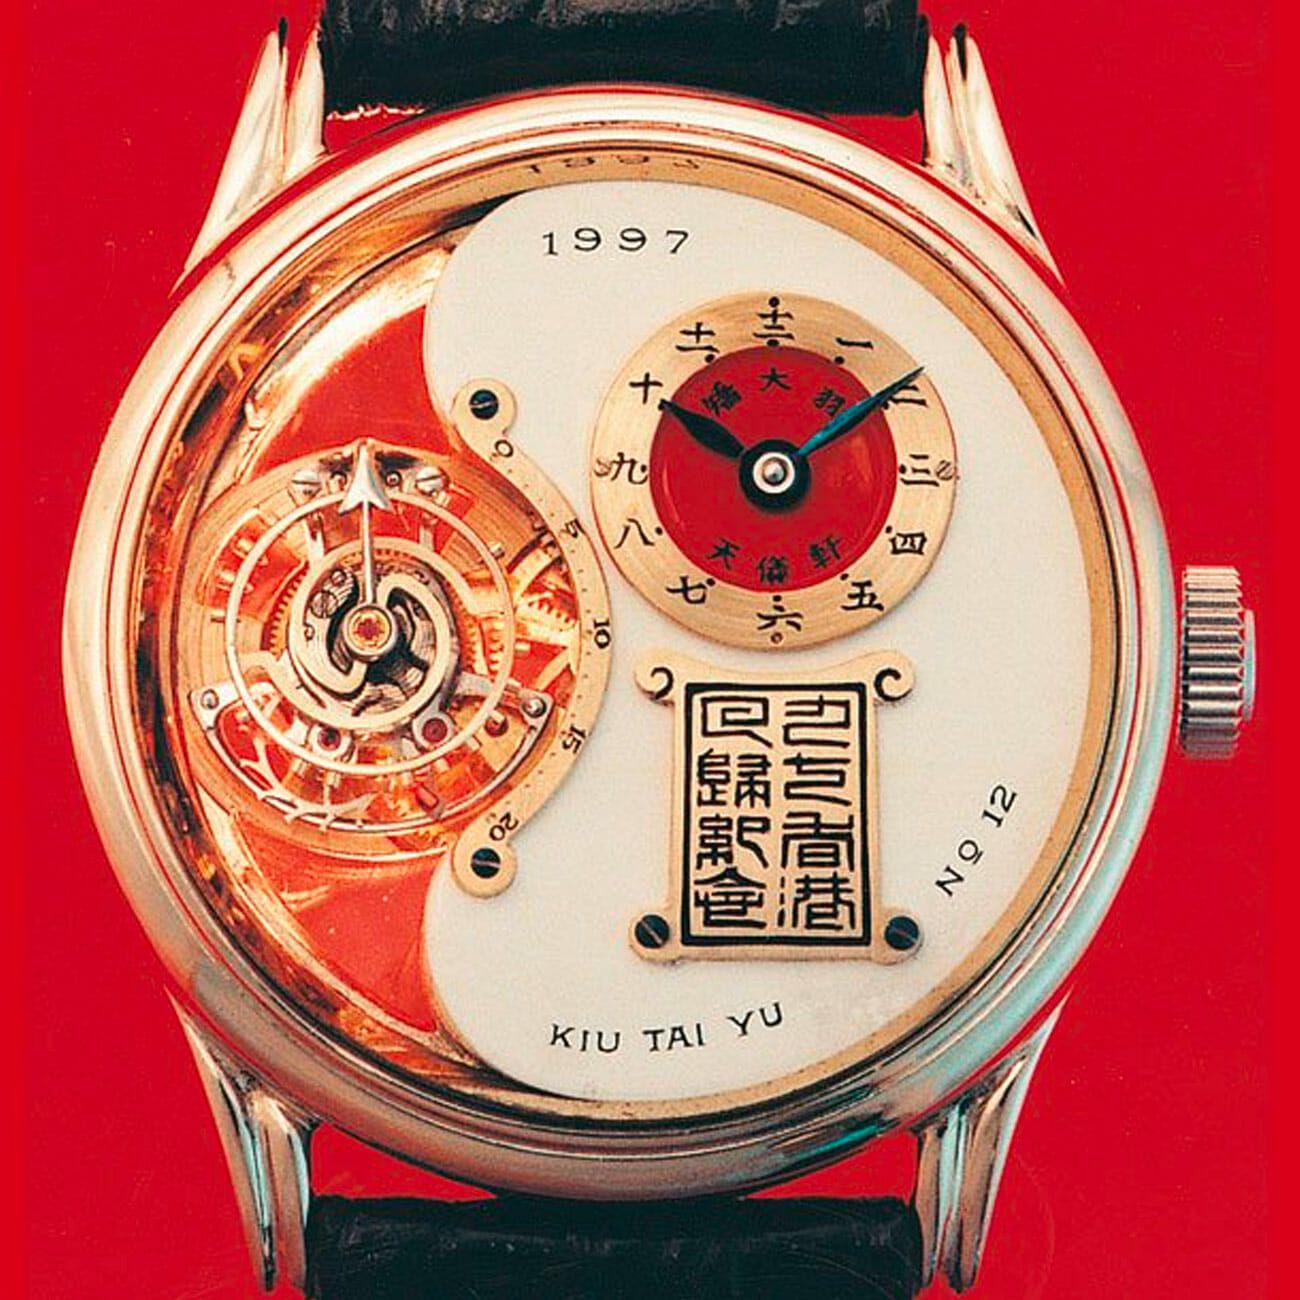 Tai yu. Часы Seagull Tourbillon. Китайские часы с турбийоном. Часы Seagull Moonphase. Seagull Tourbillon watch.